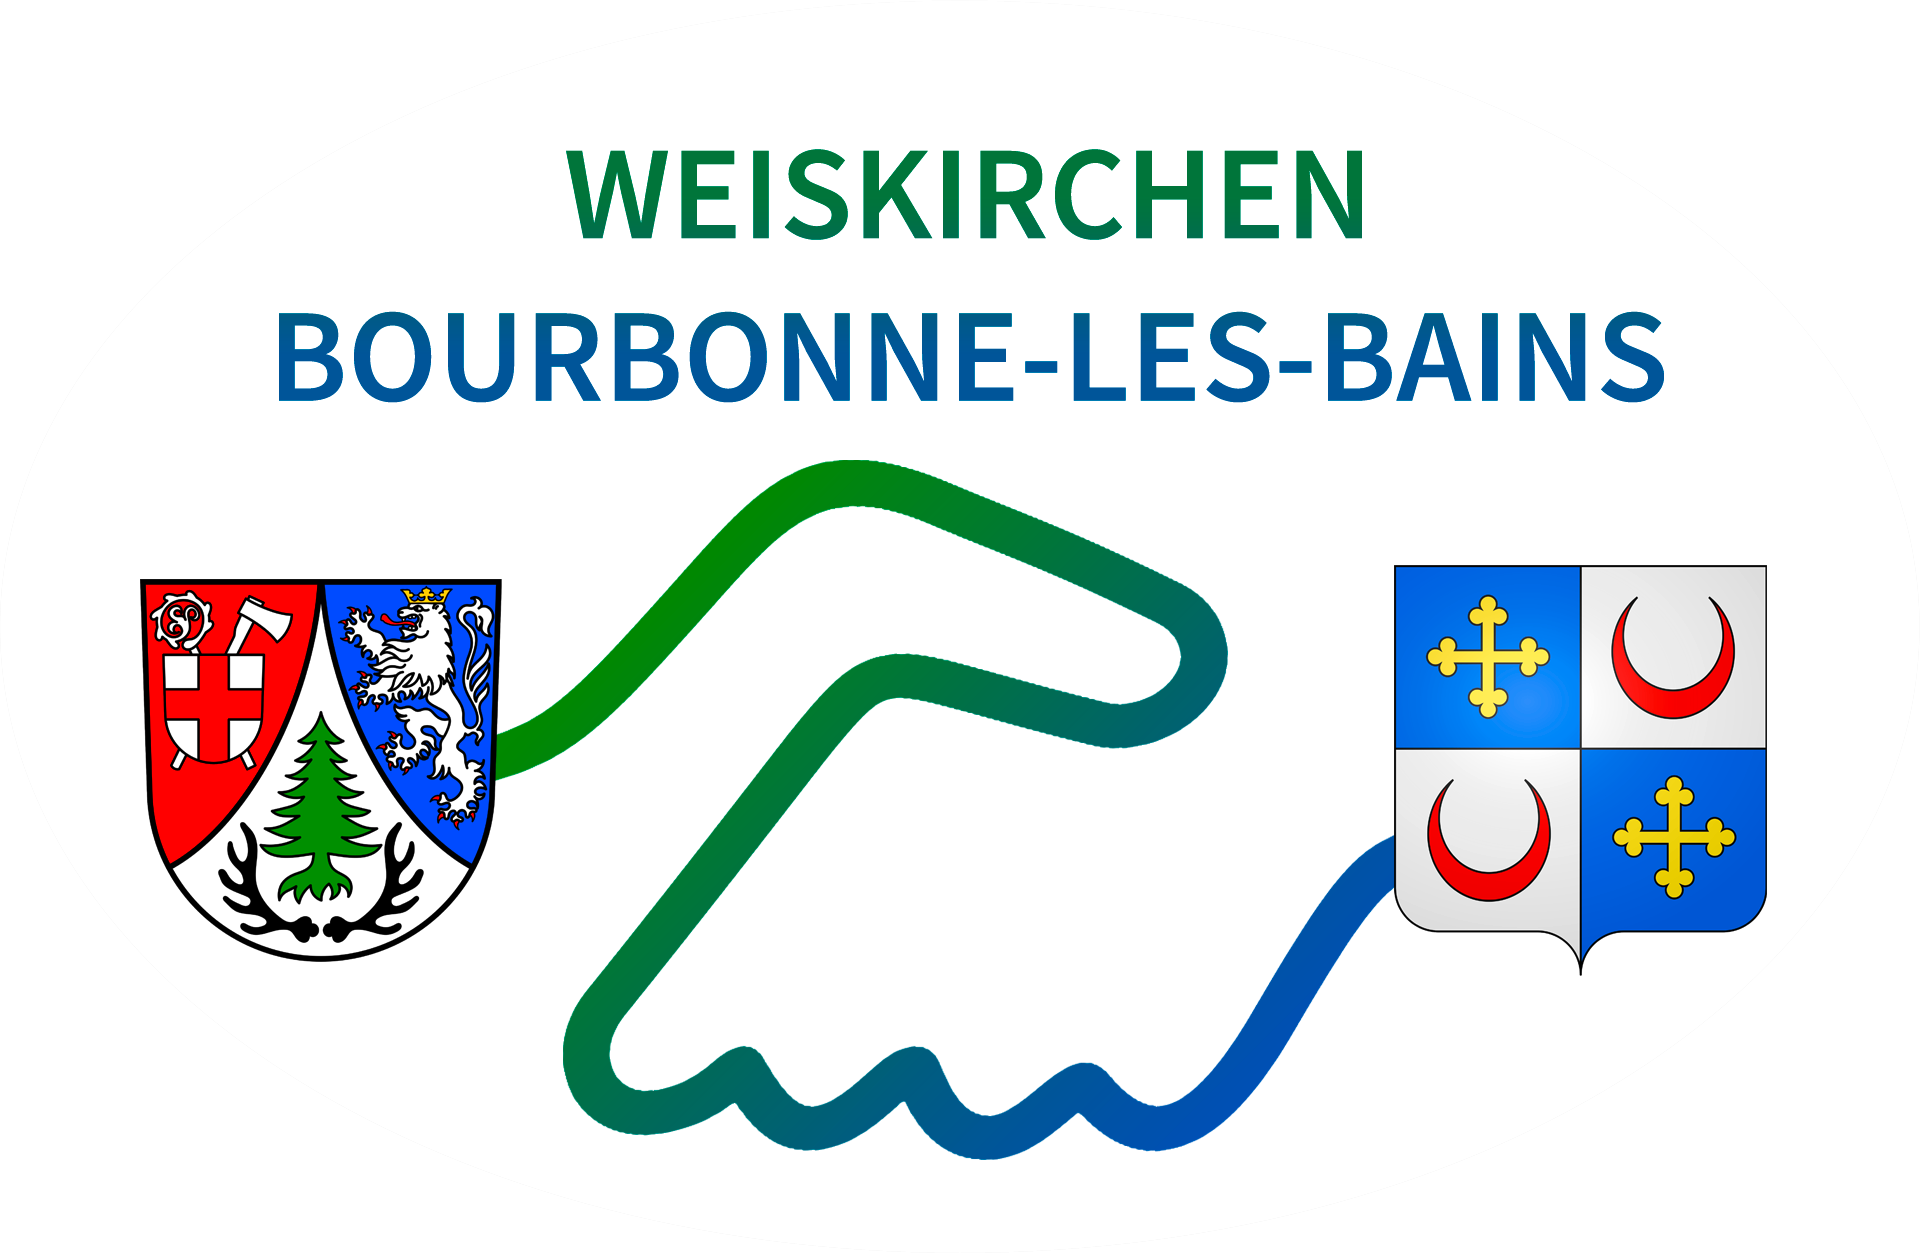 Städtepartnerschaft Weiskirchen mit Bourbonne-les-Bains